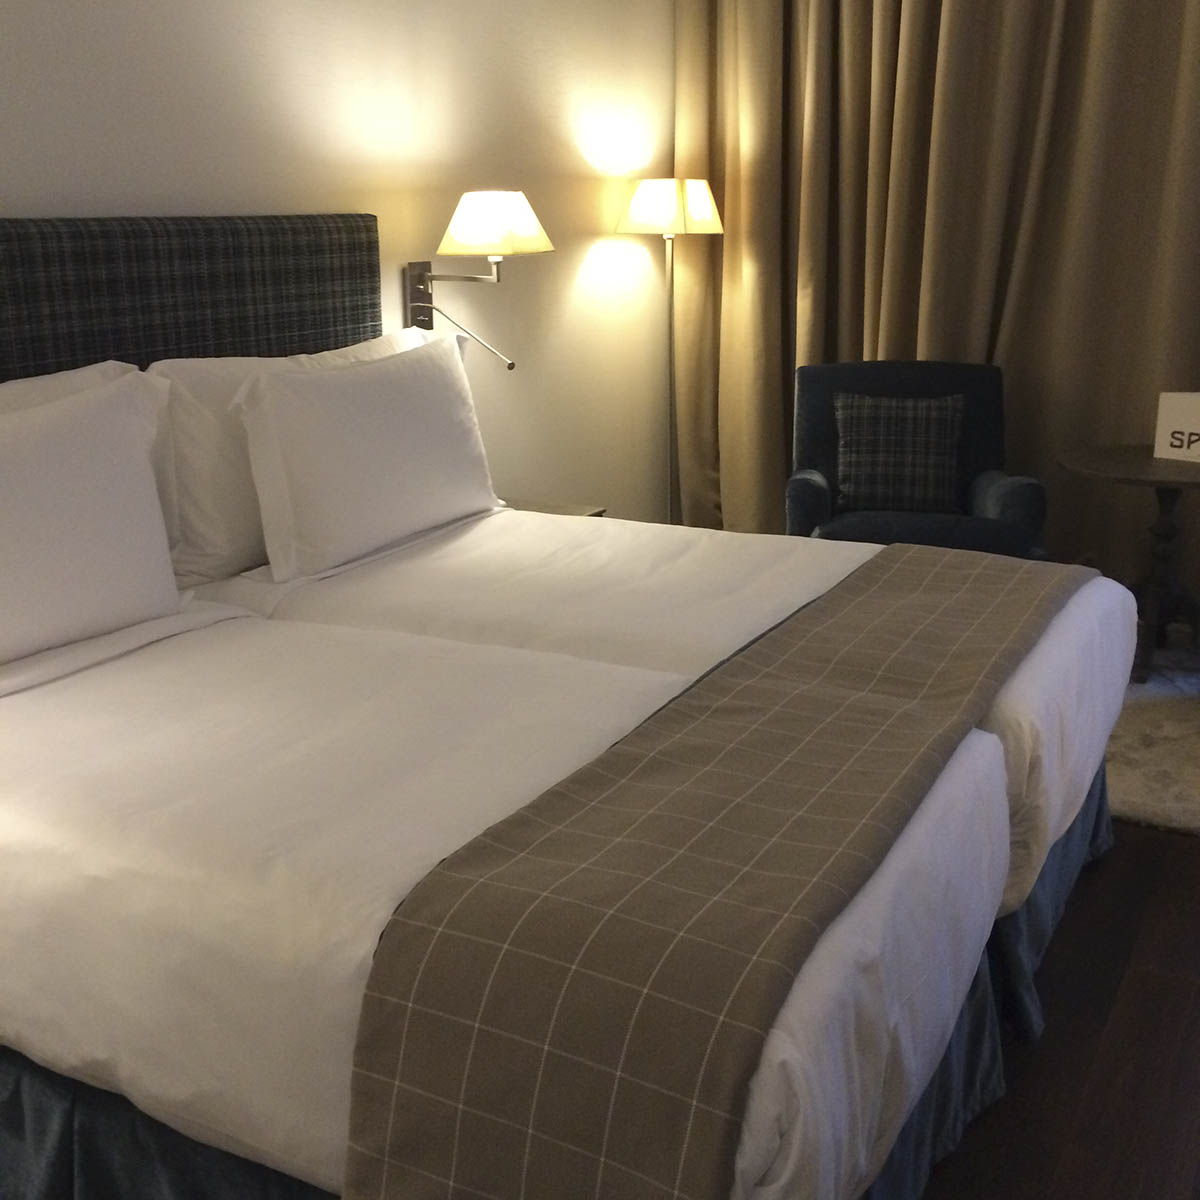 URSO Hotel, Madrid: twin bedroom